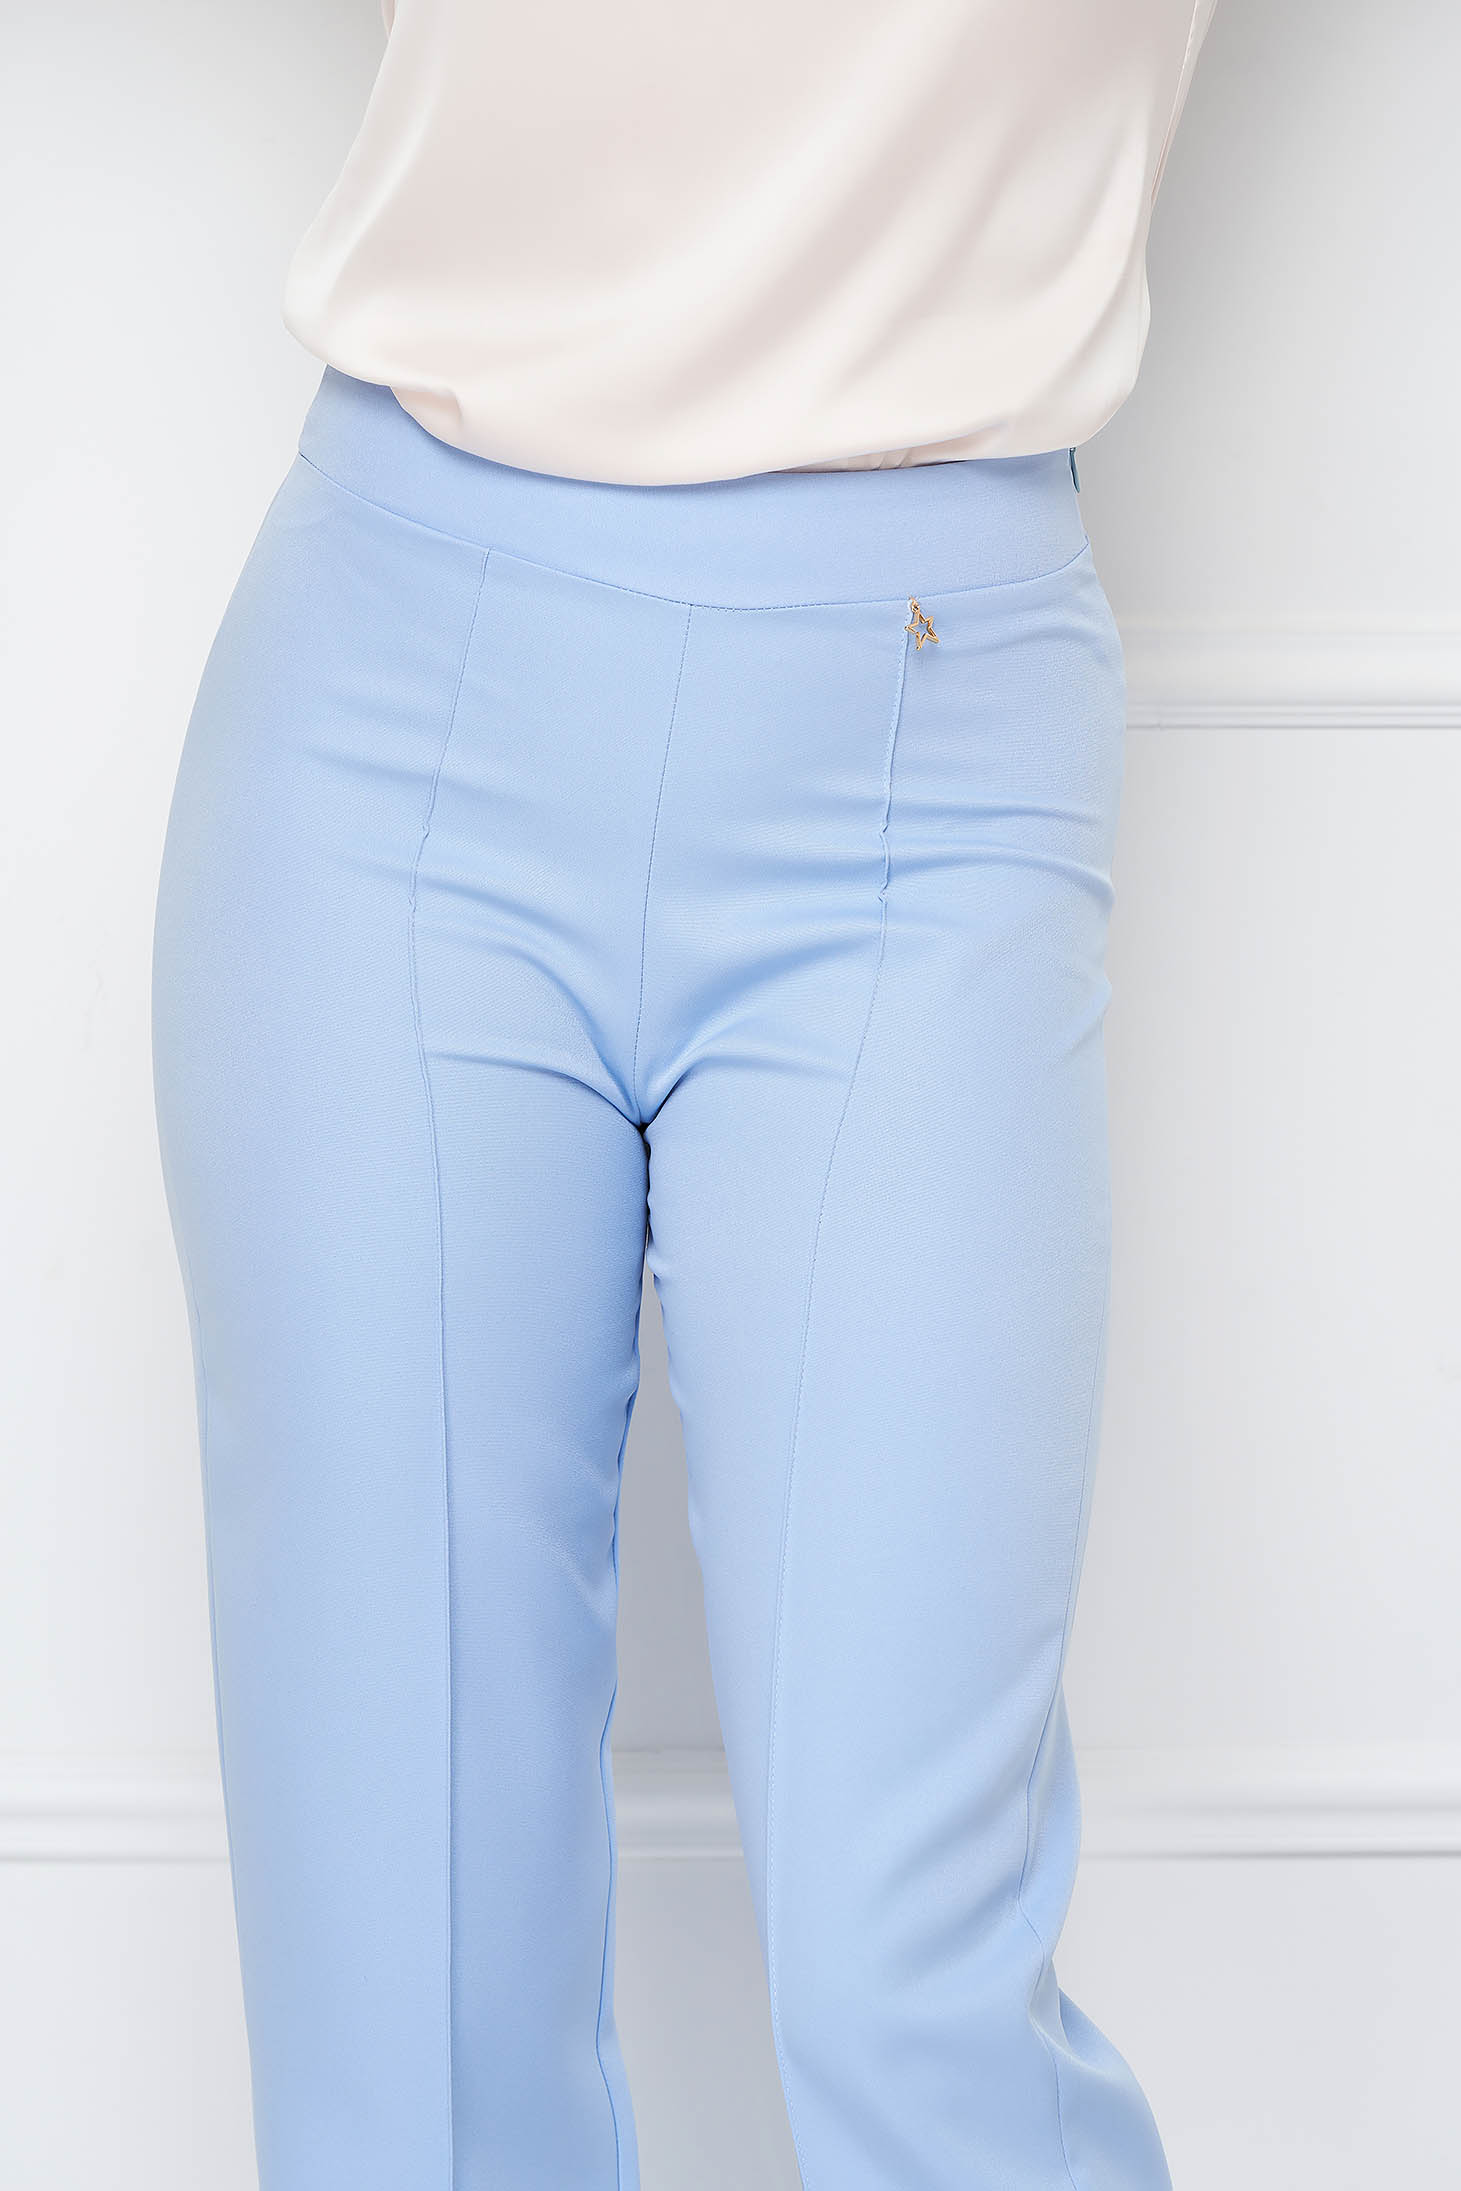 Pantaloni din stofa usor elastica albastru-deschis lungi evazati cu talie inalta - StarShinerS 4 - StarShinerS.ro